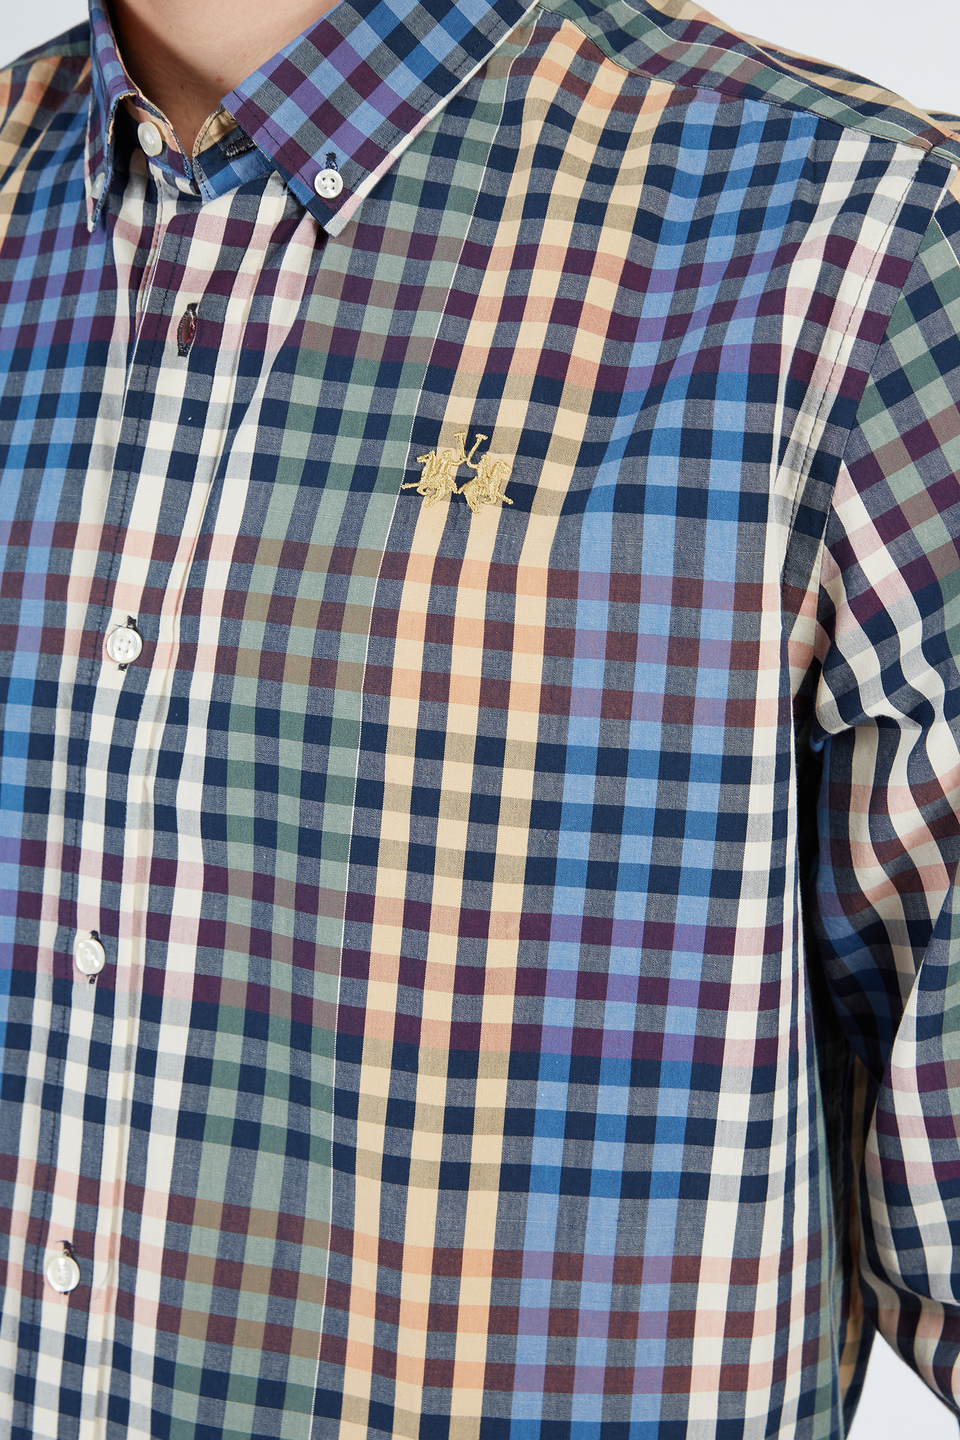 Herren-Langarmshirt aus 100% Baumwolle | La Martina - Official Online Shop